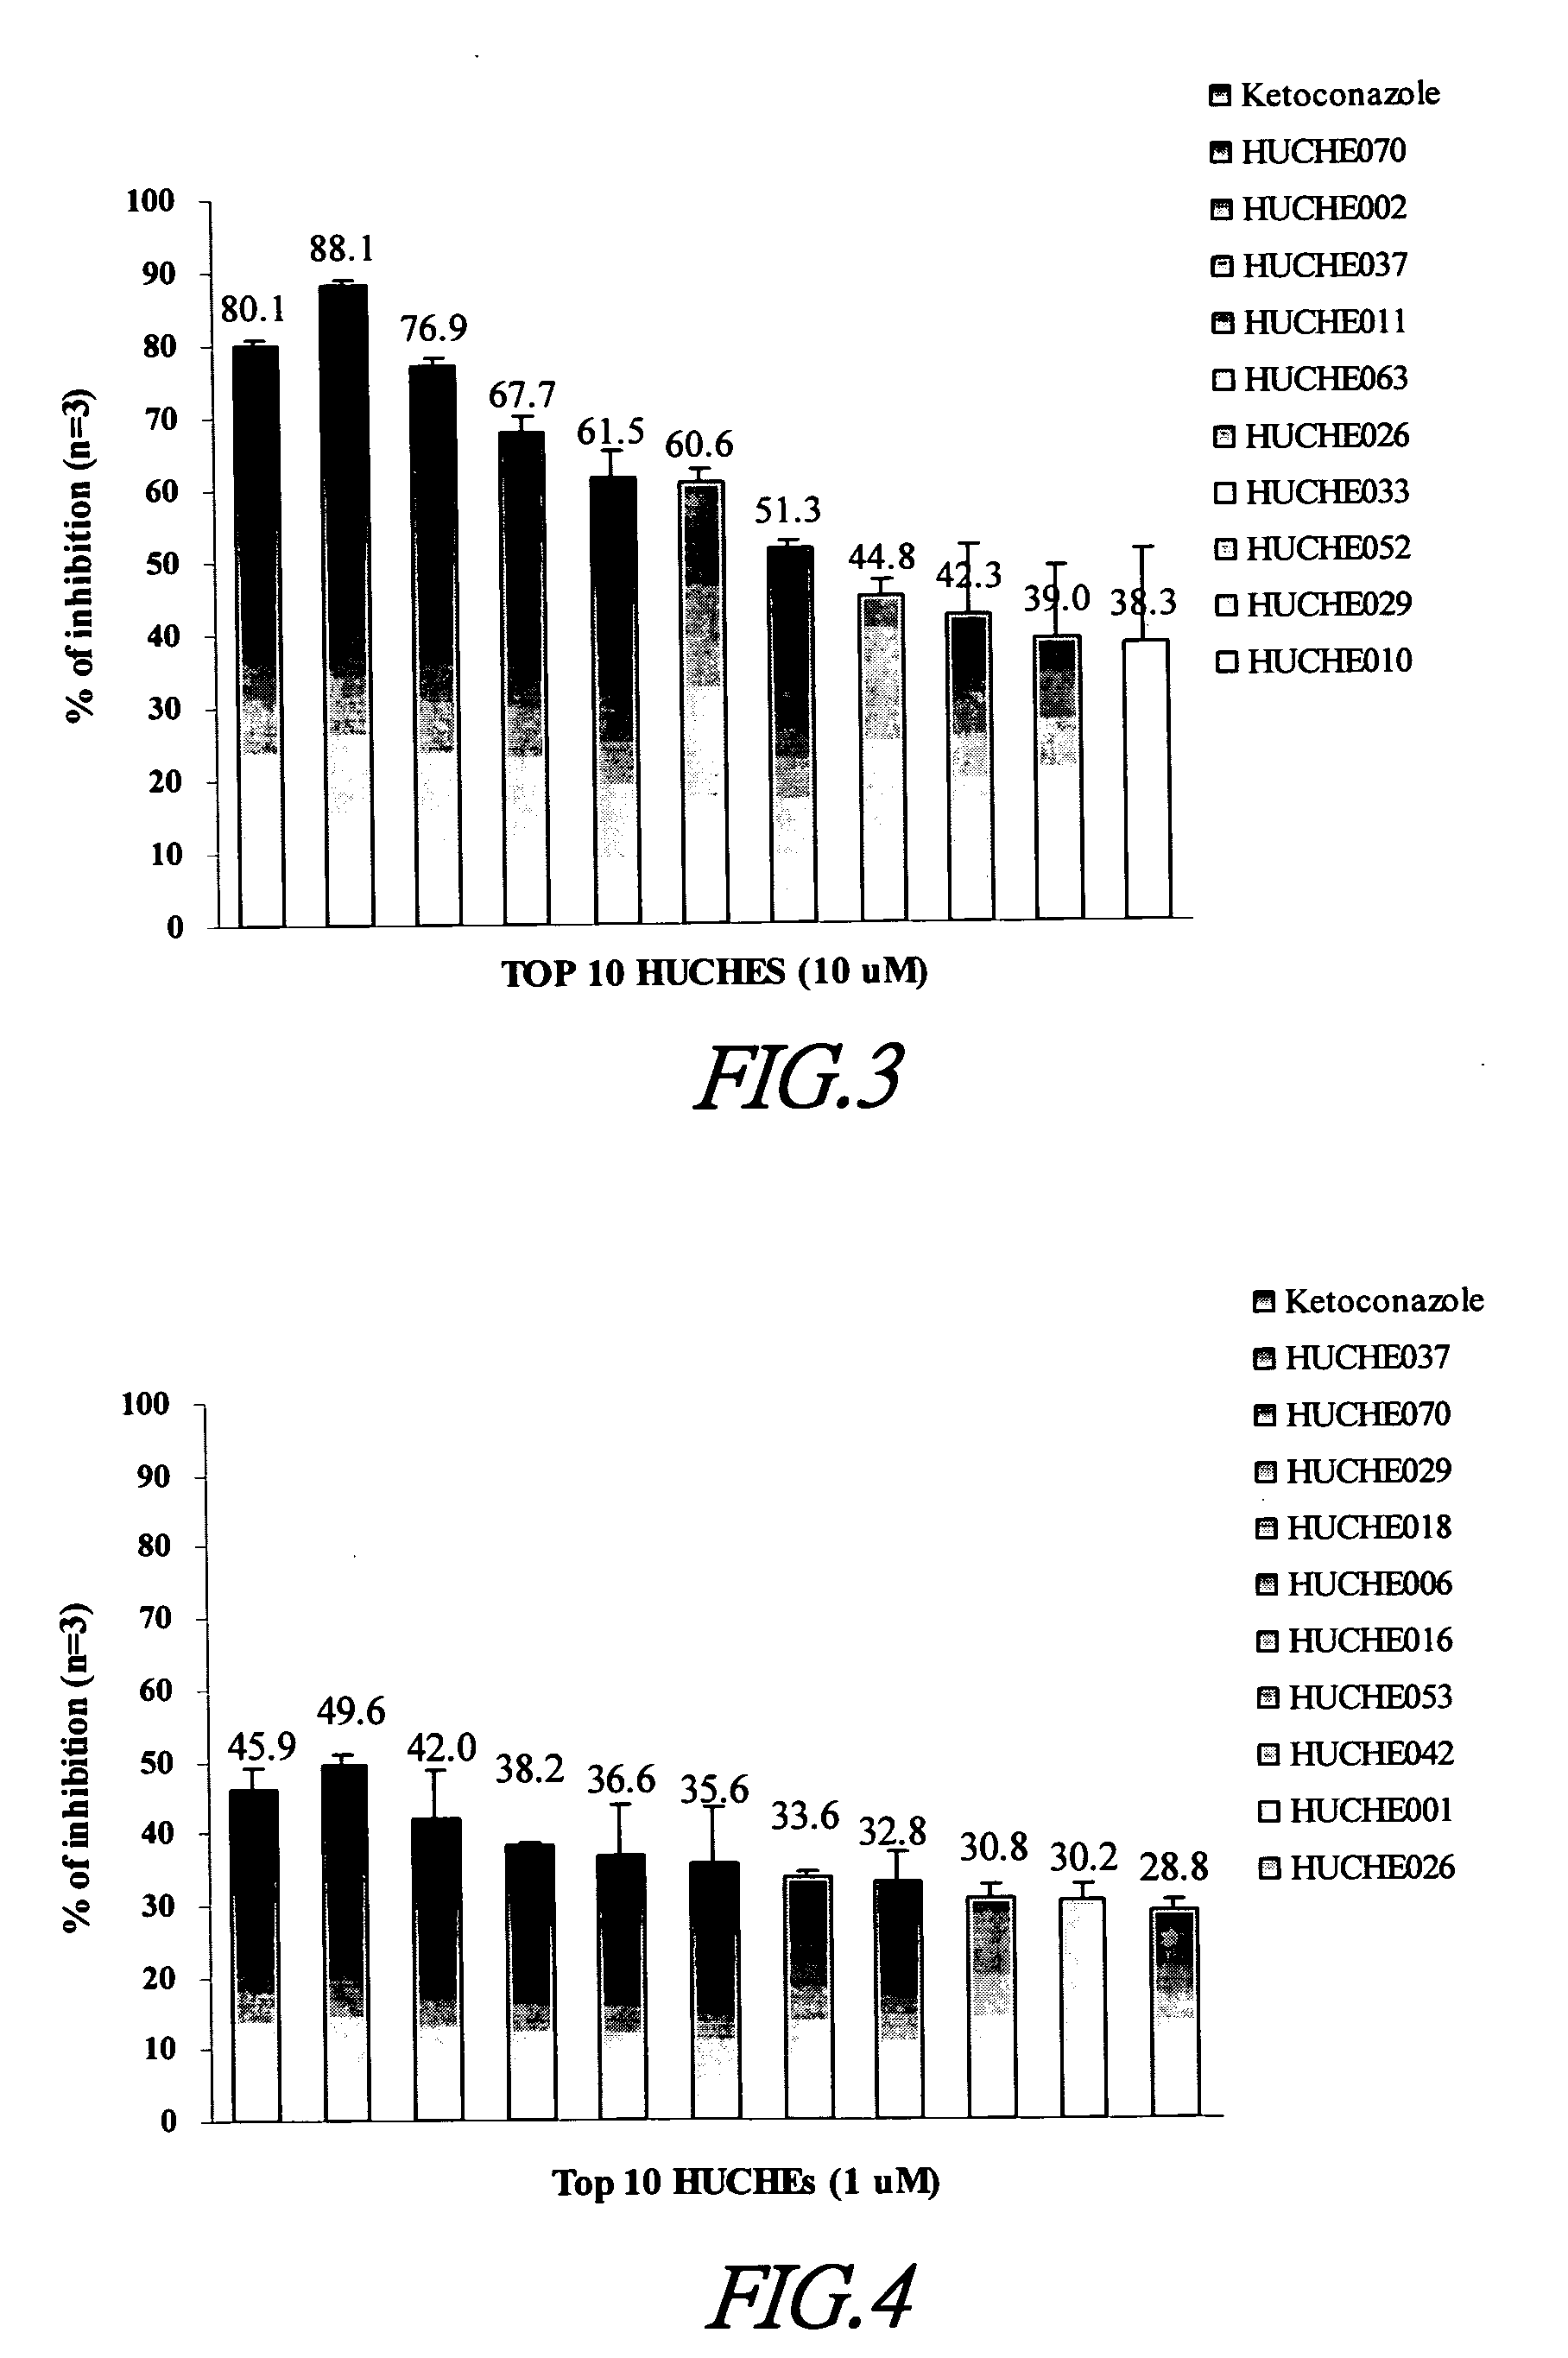 Cytochrome P450 2C9 inhibitors